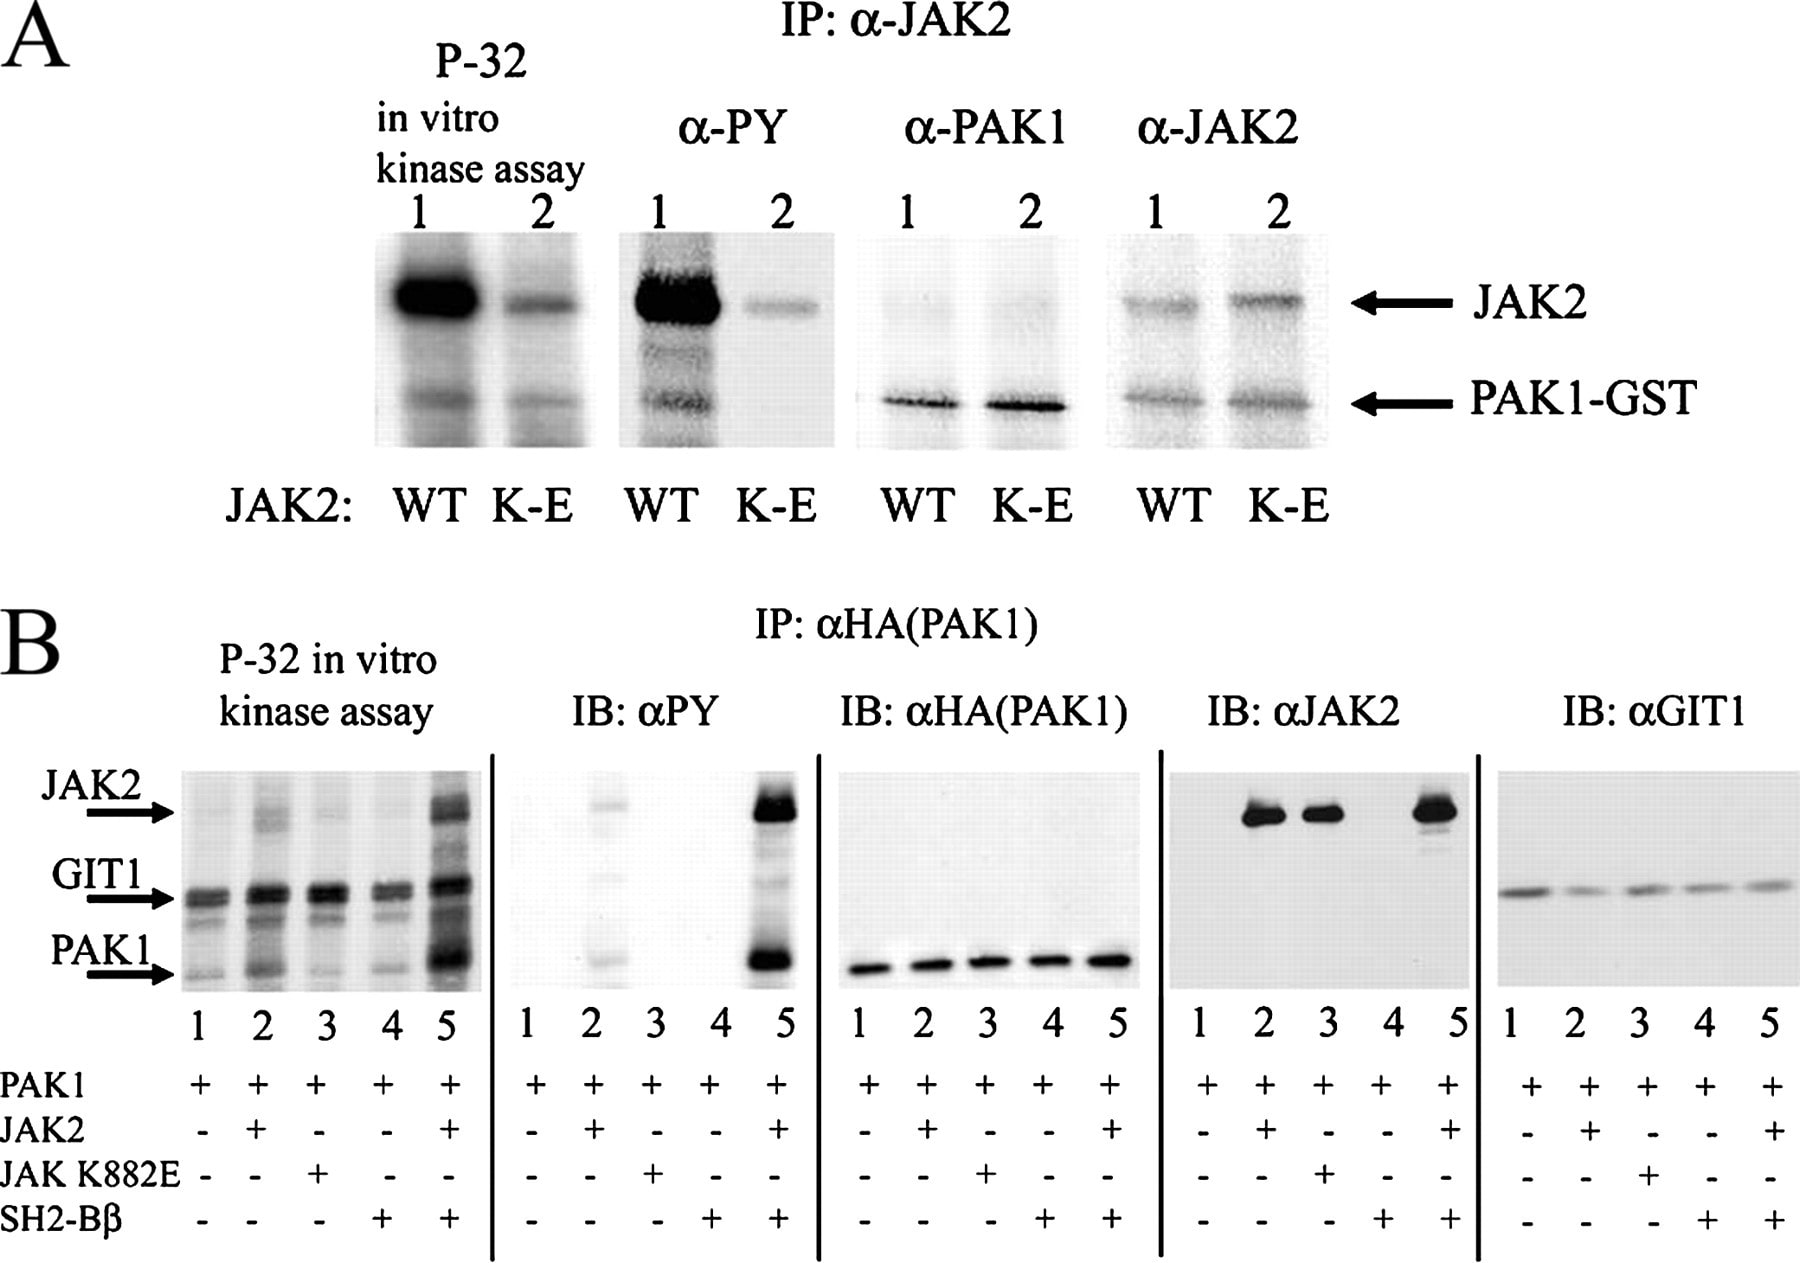 JAK2 Antibody in Western Blot (WB)